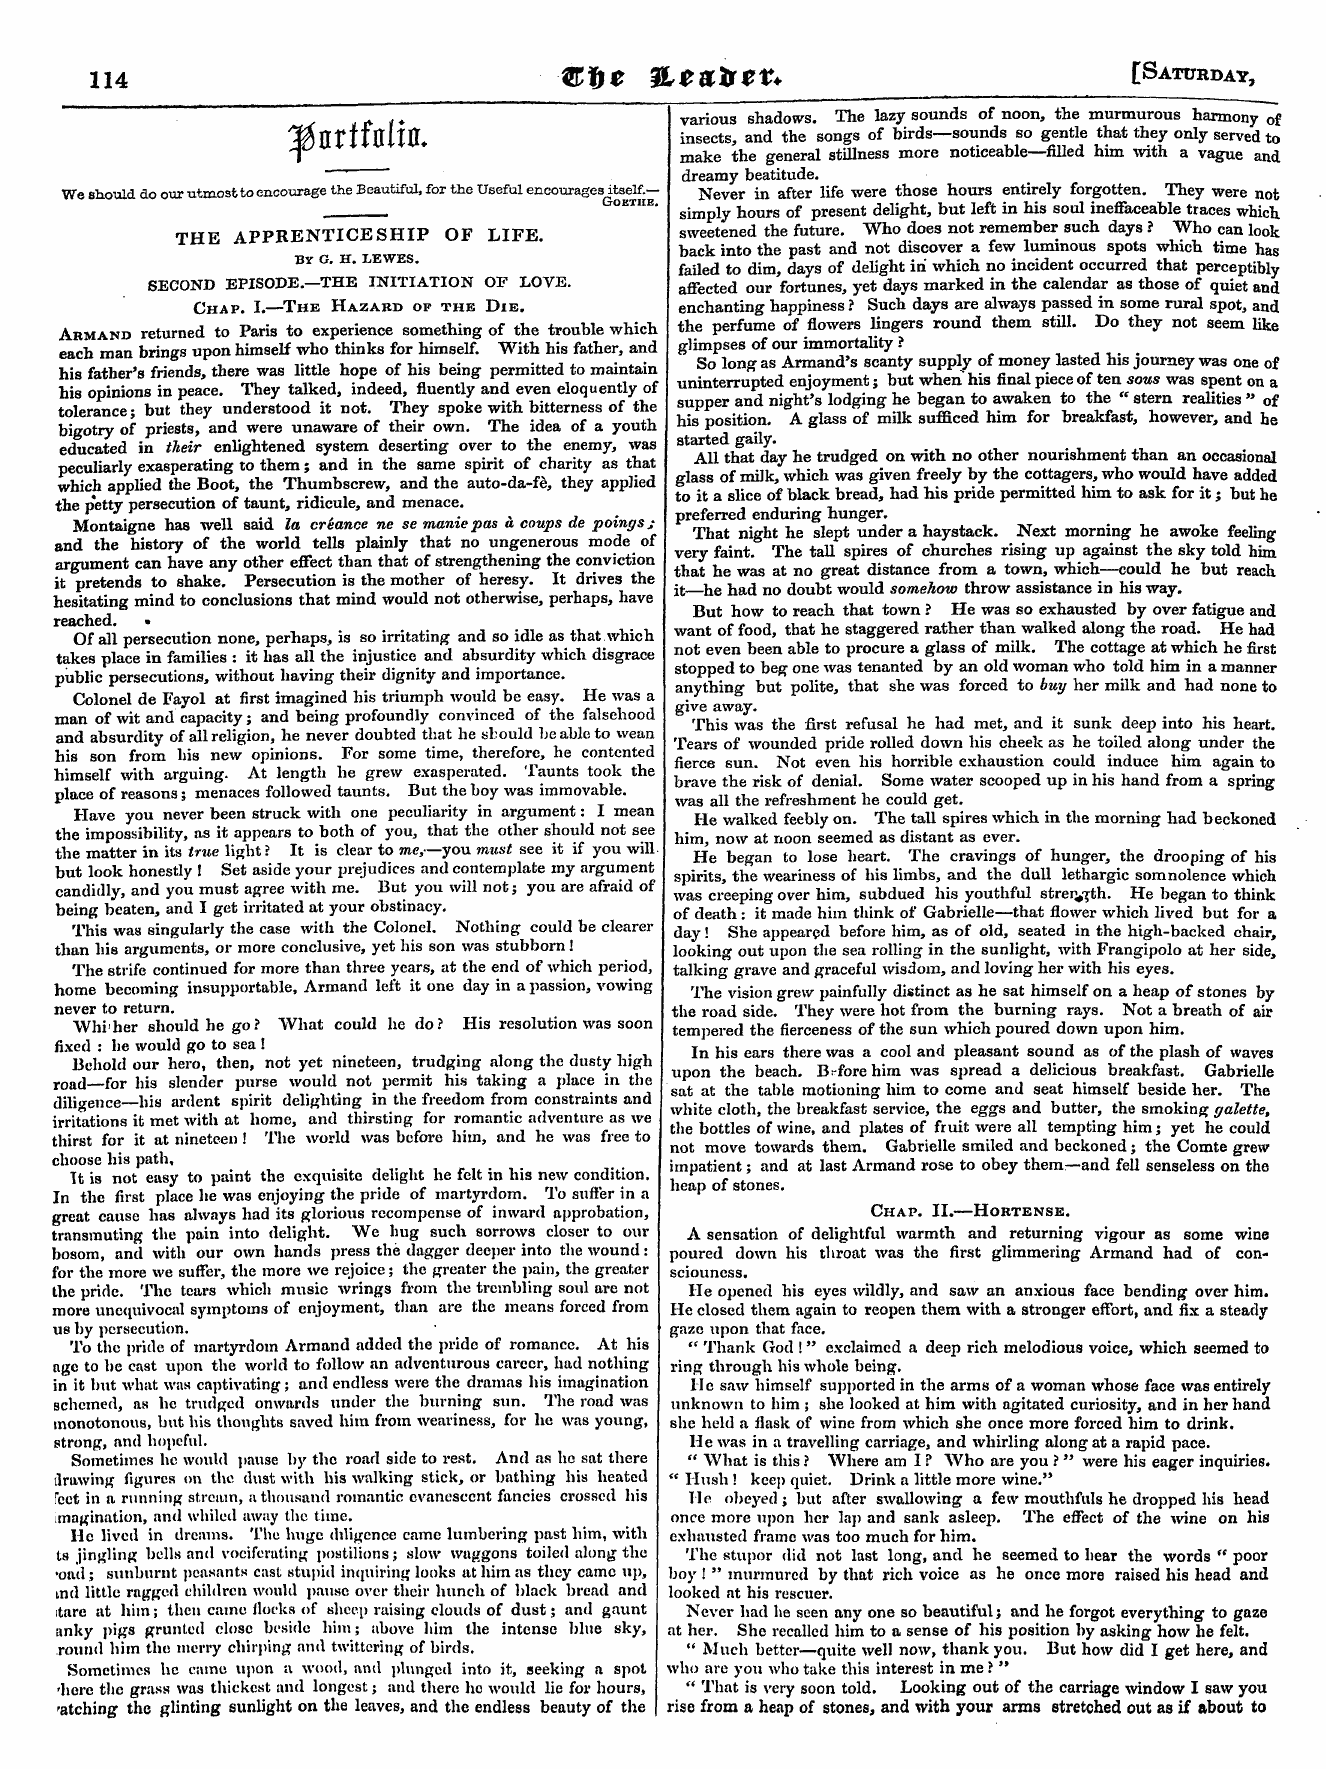 Leader (1850-1860): jS F Y, Country edition - ^ 40flrttluttt* I